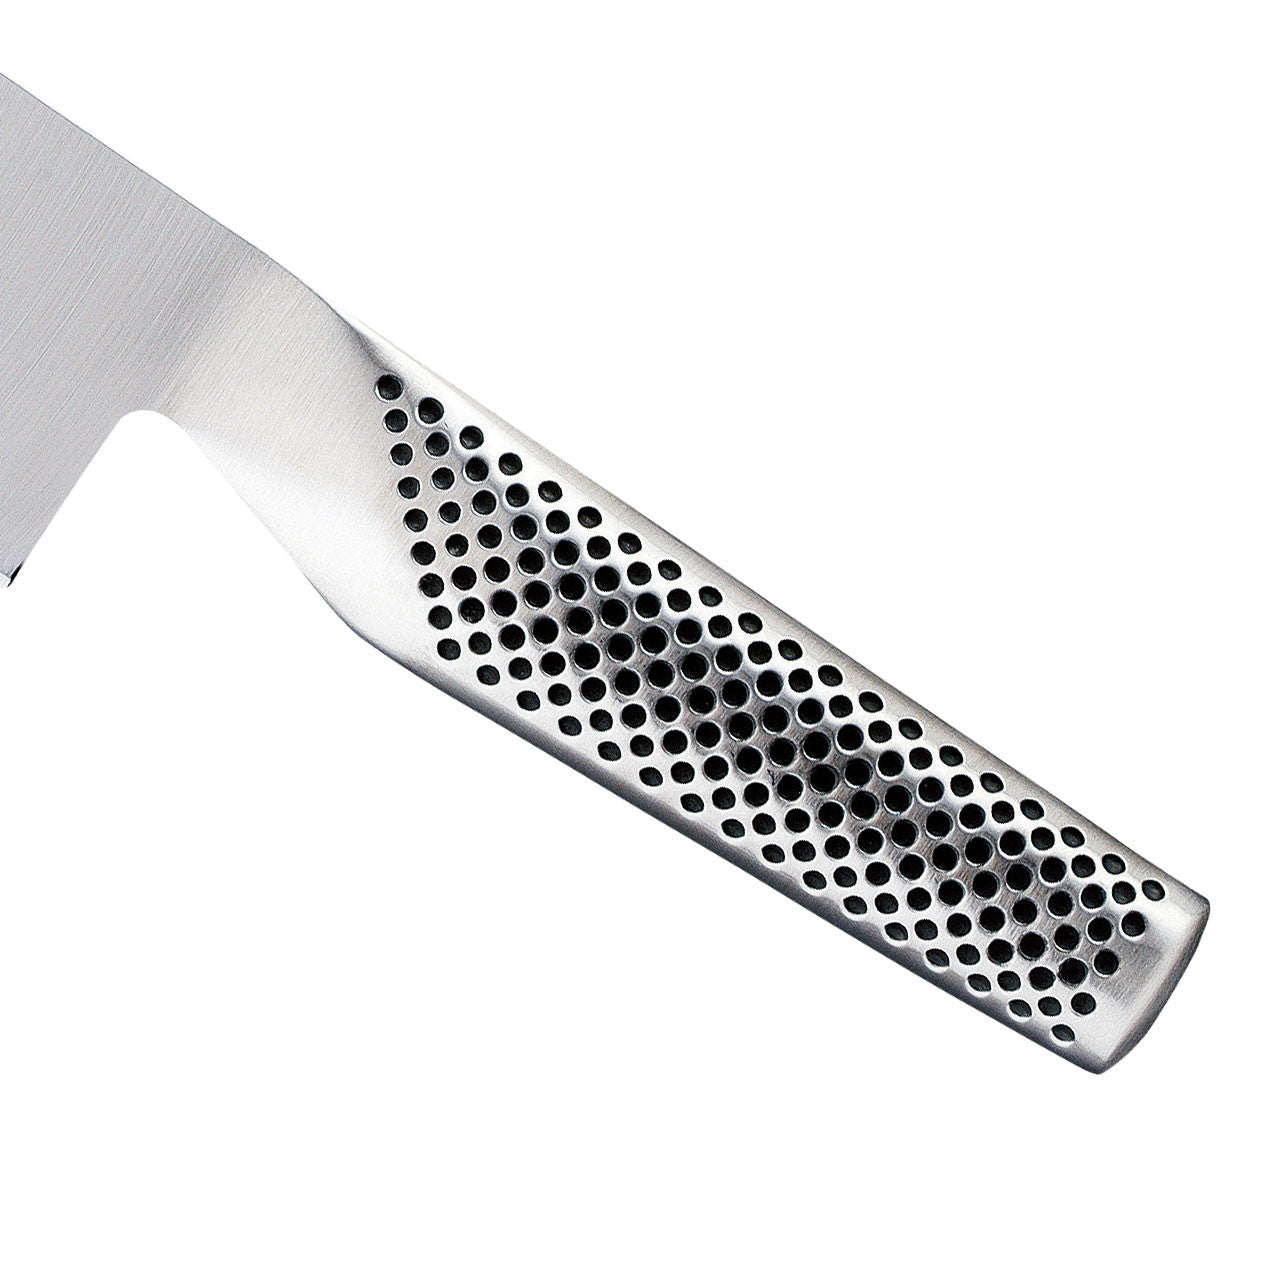 Global Classic Cook's Knife 20cm - G-2